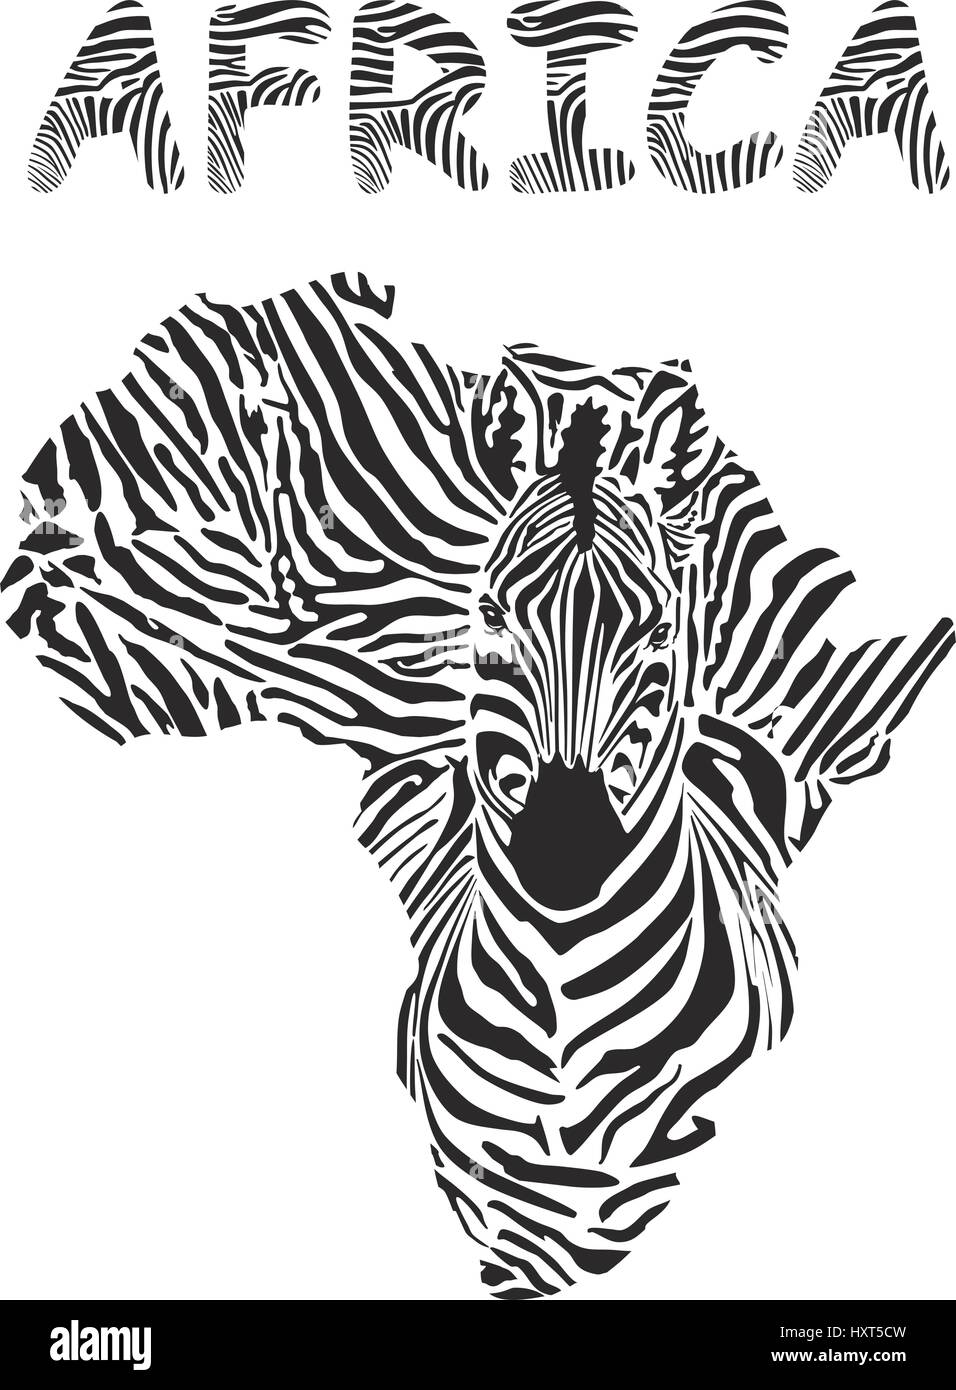 Zebra-Silhouette und Afrika Kontinent Stock Vektor